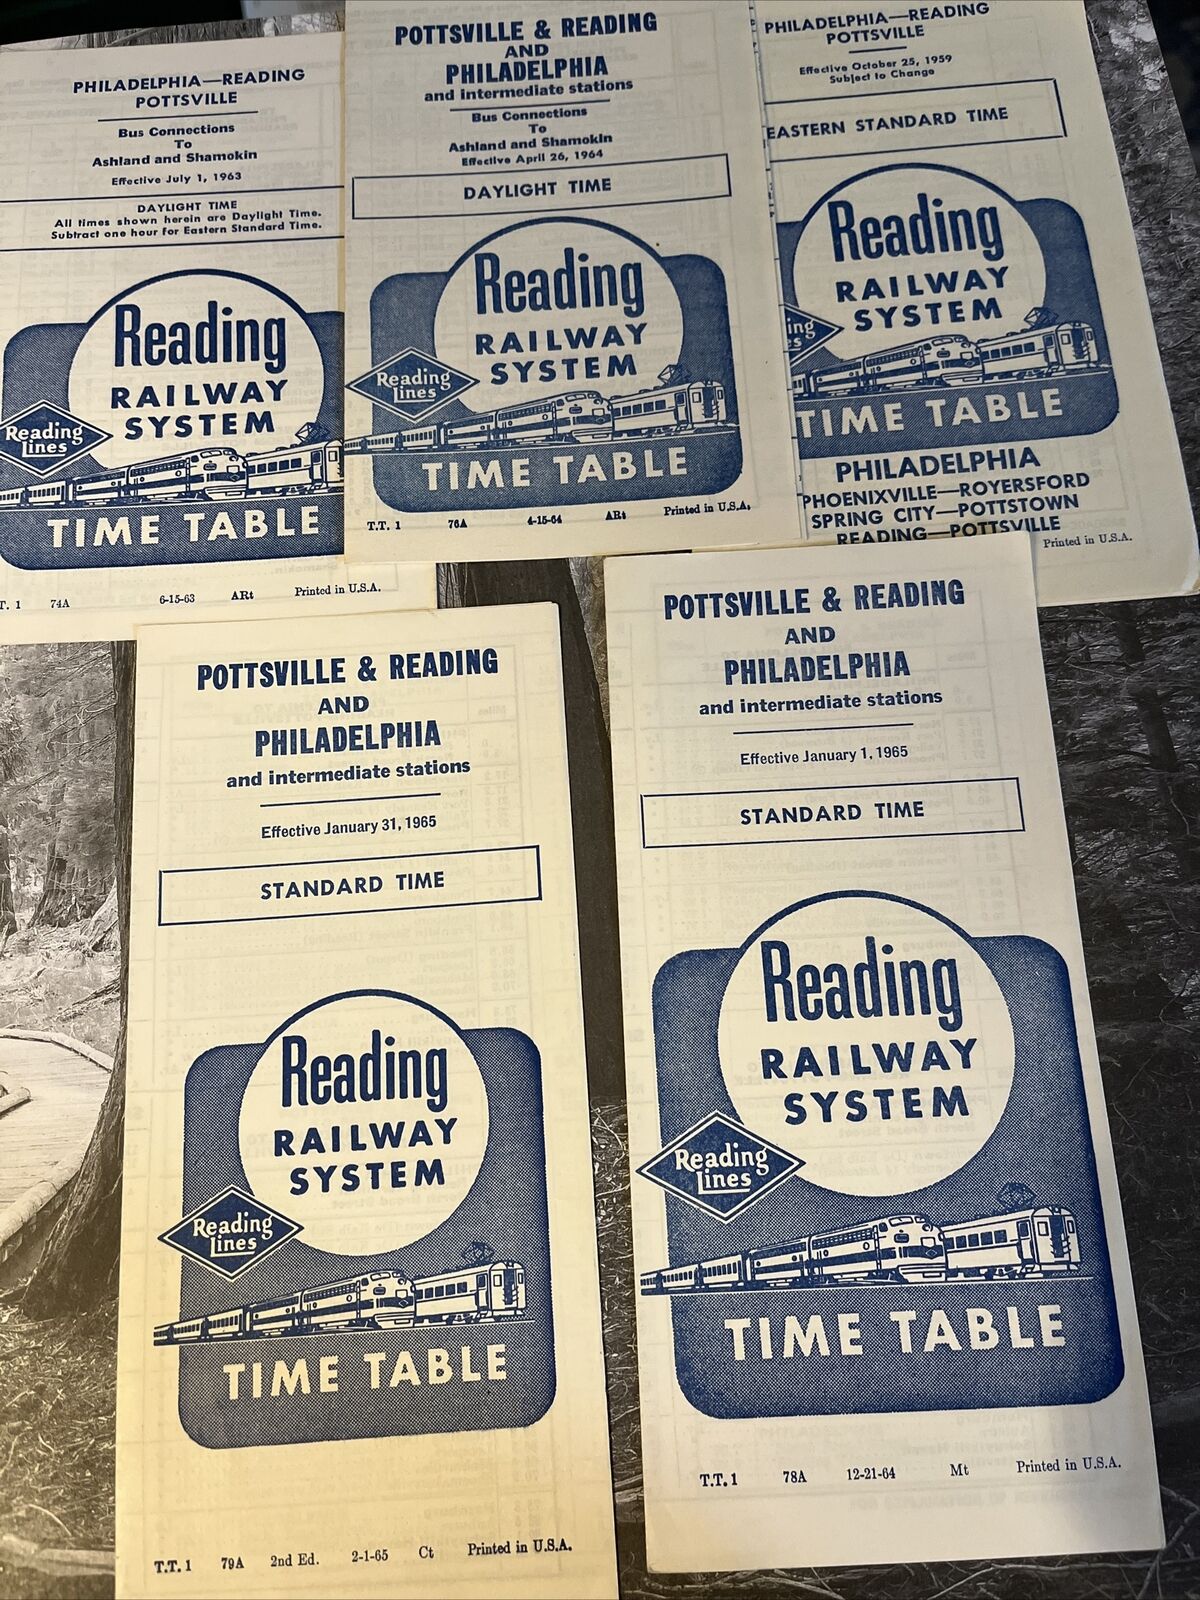 5 Reading Pottsville Philadelphia Timetables 1959-1965